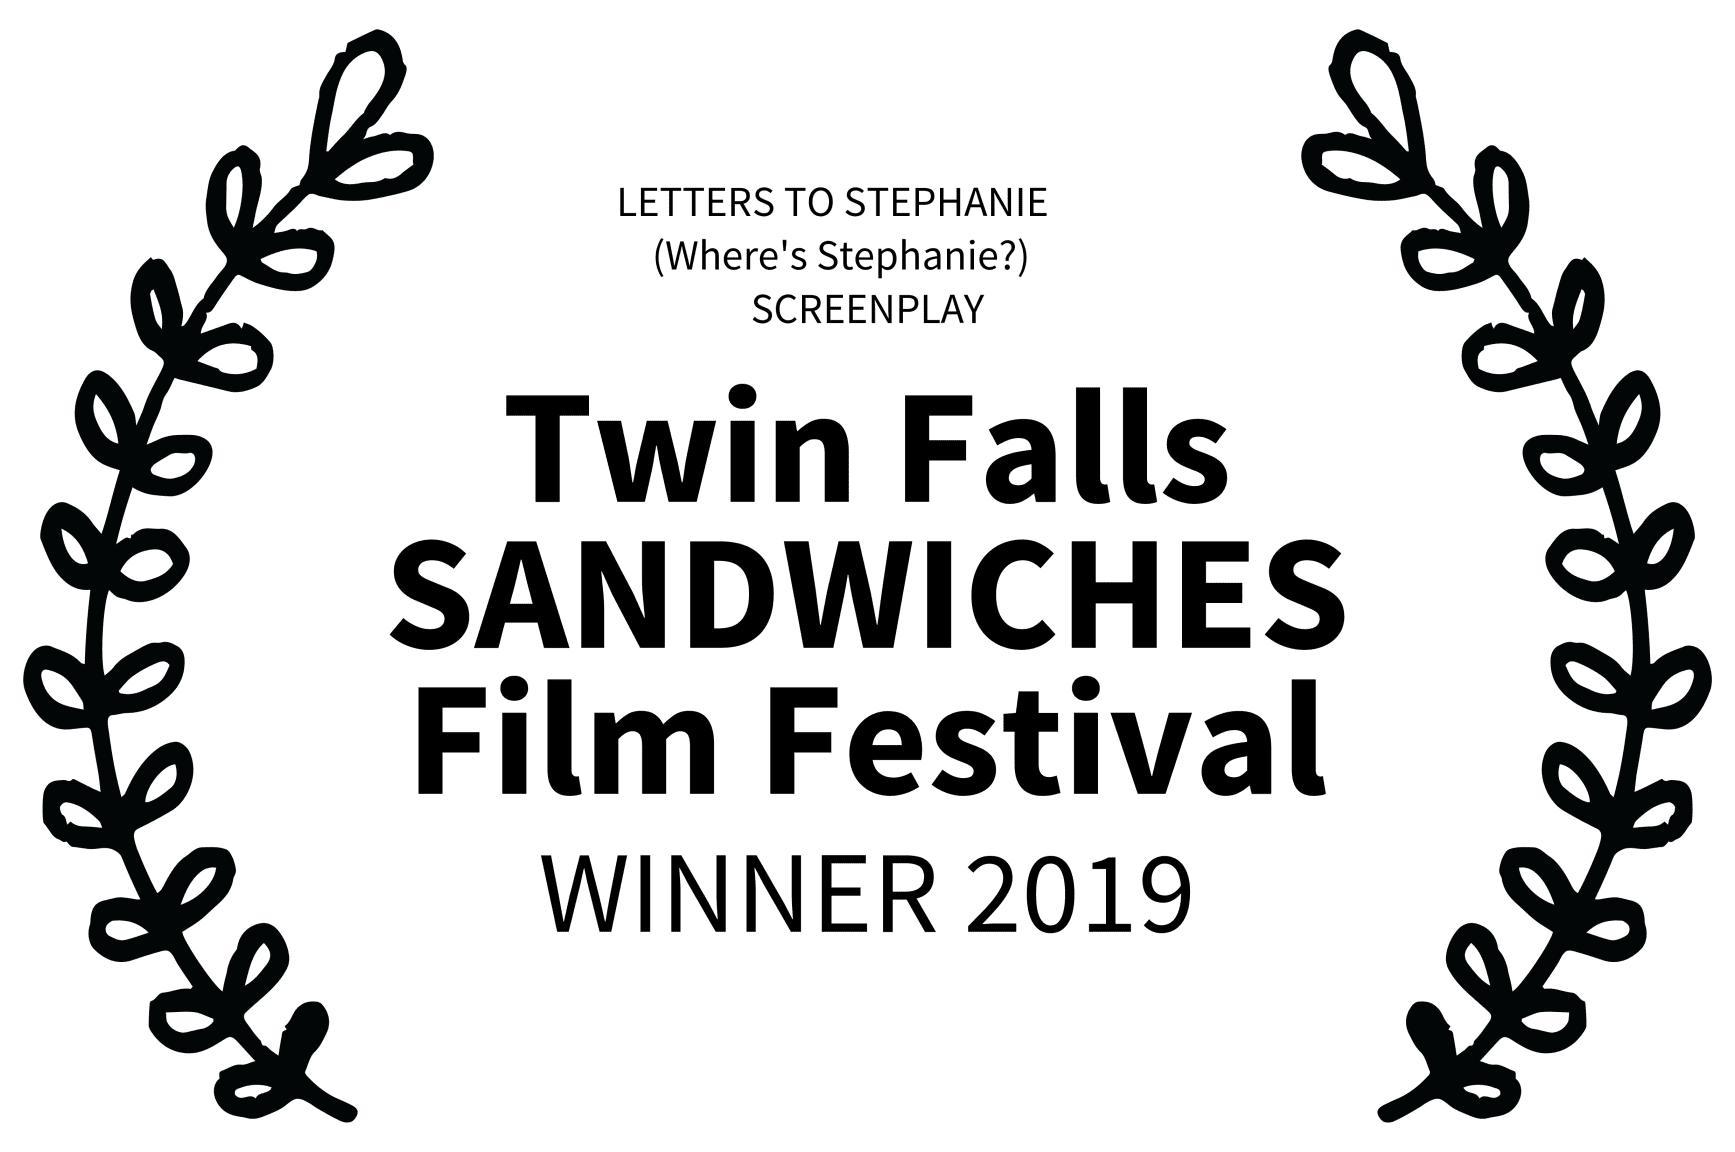 Twin Falls Sandwiches Film Festival winner